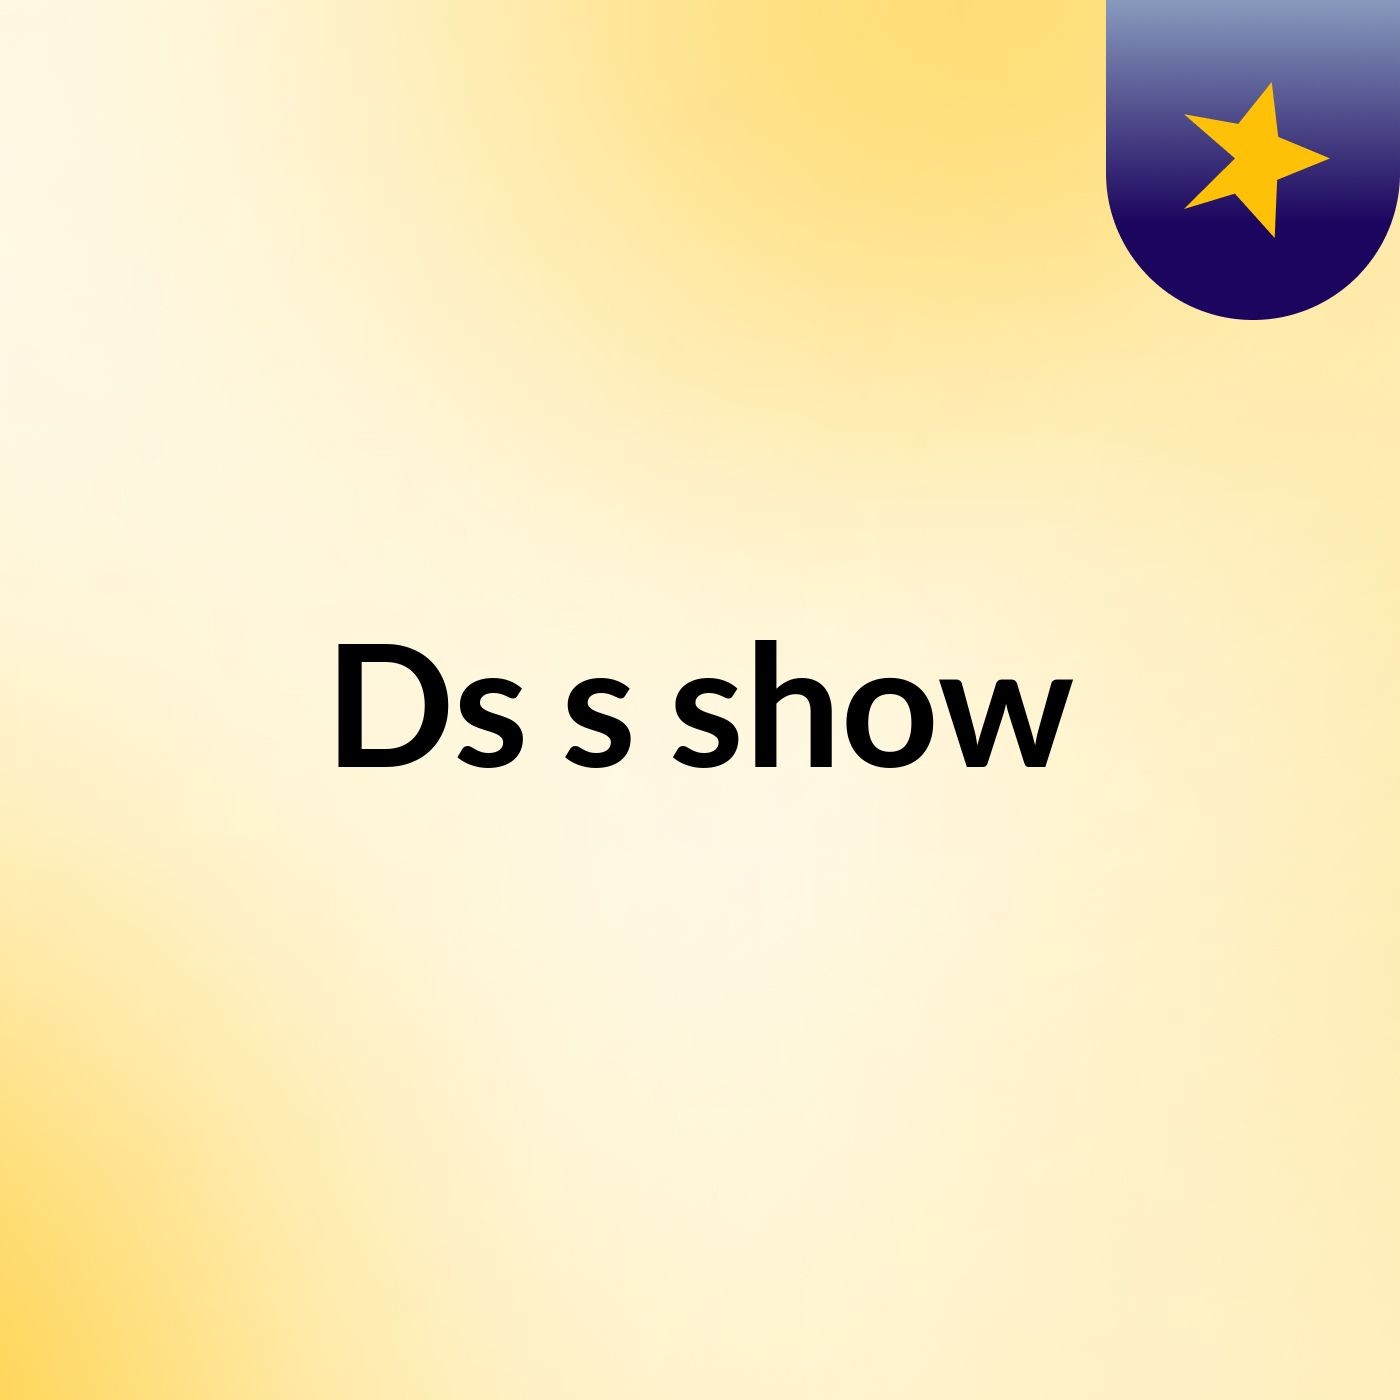 Ds's show